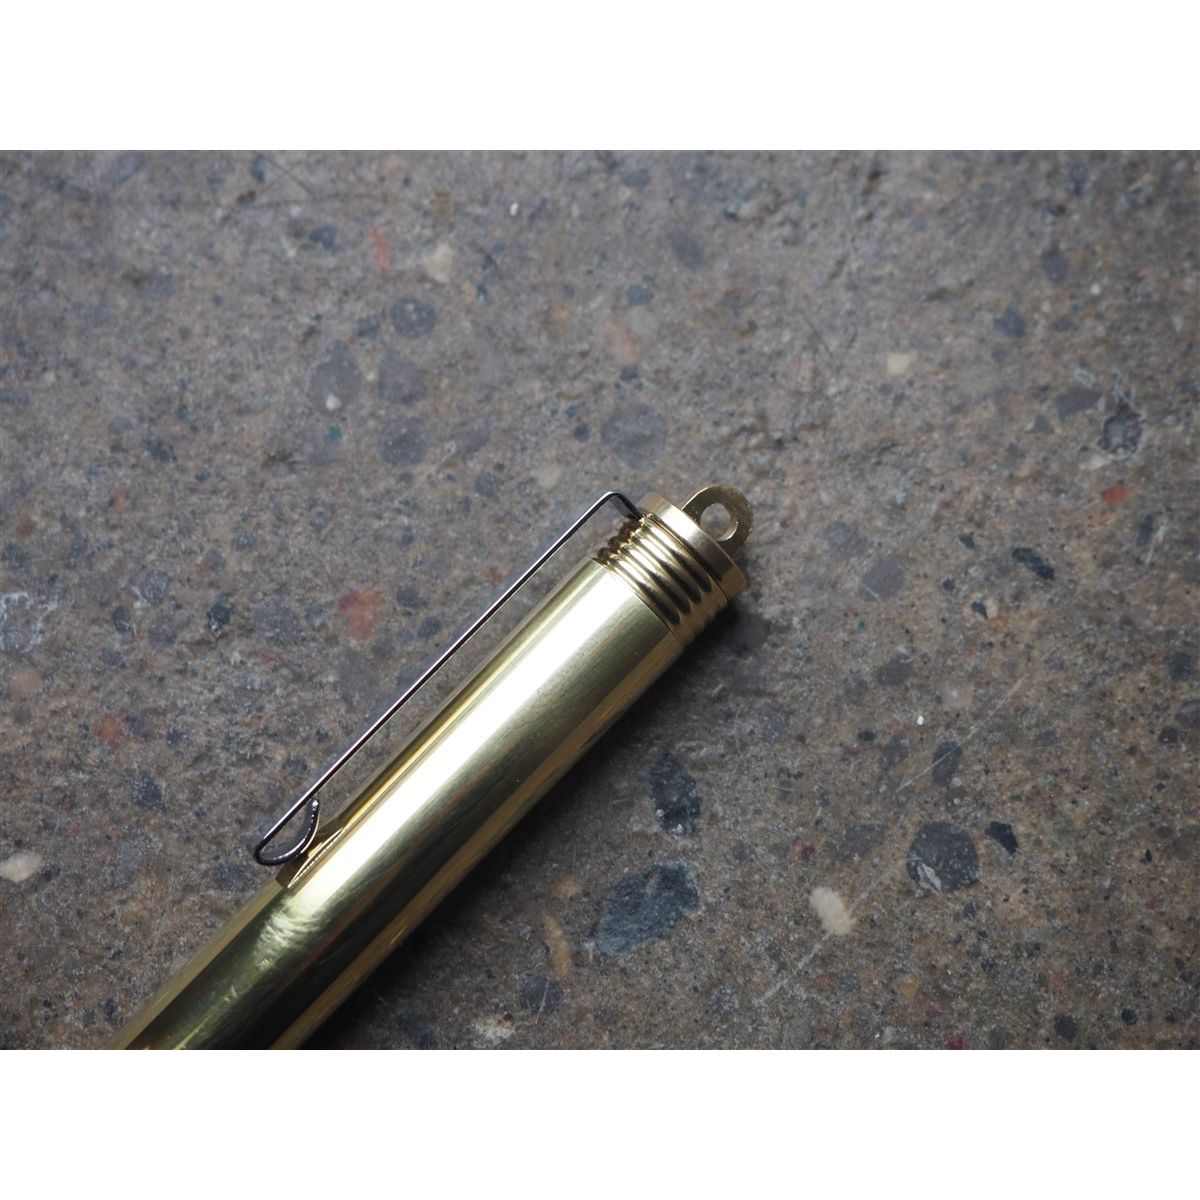 Traveler's Company Brass Fountain Pen, Fine – Midoco Art & Office Supplies